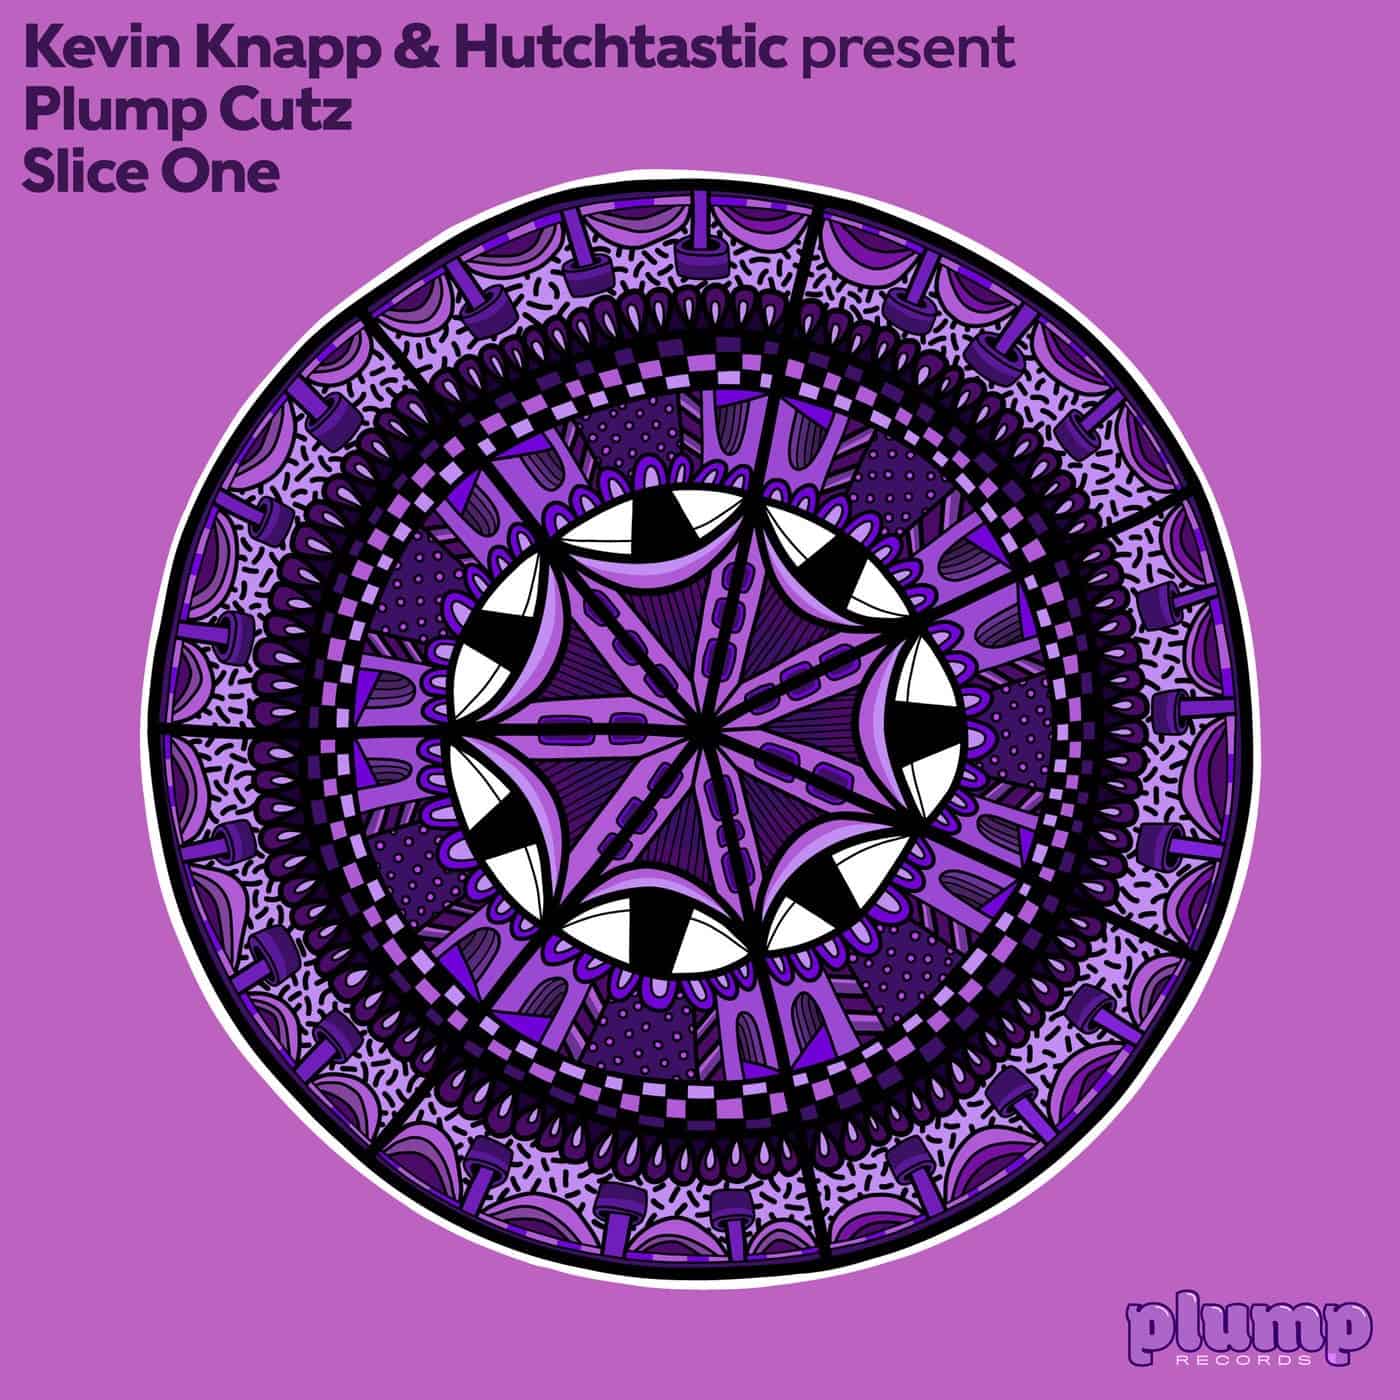 image cover: Kevin Knapp - Kevin Knapp and Hutchtastic present Plump Cutz Slice One / PLUMP010